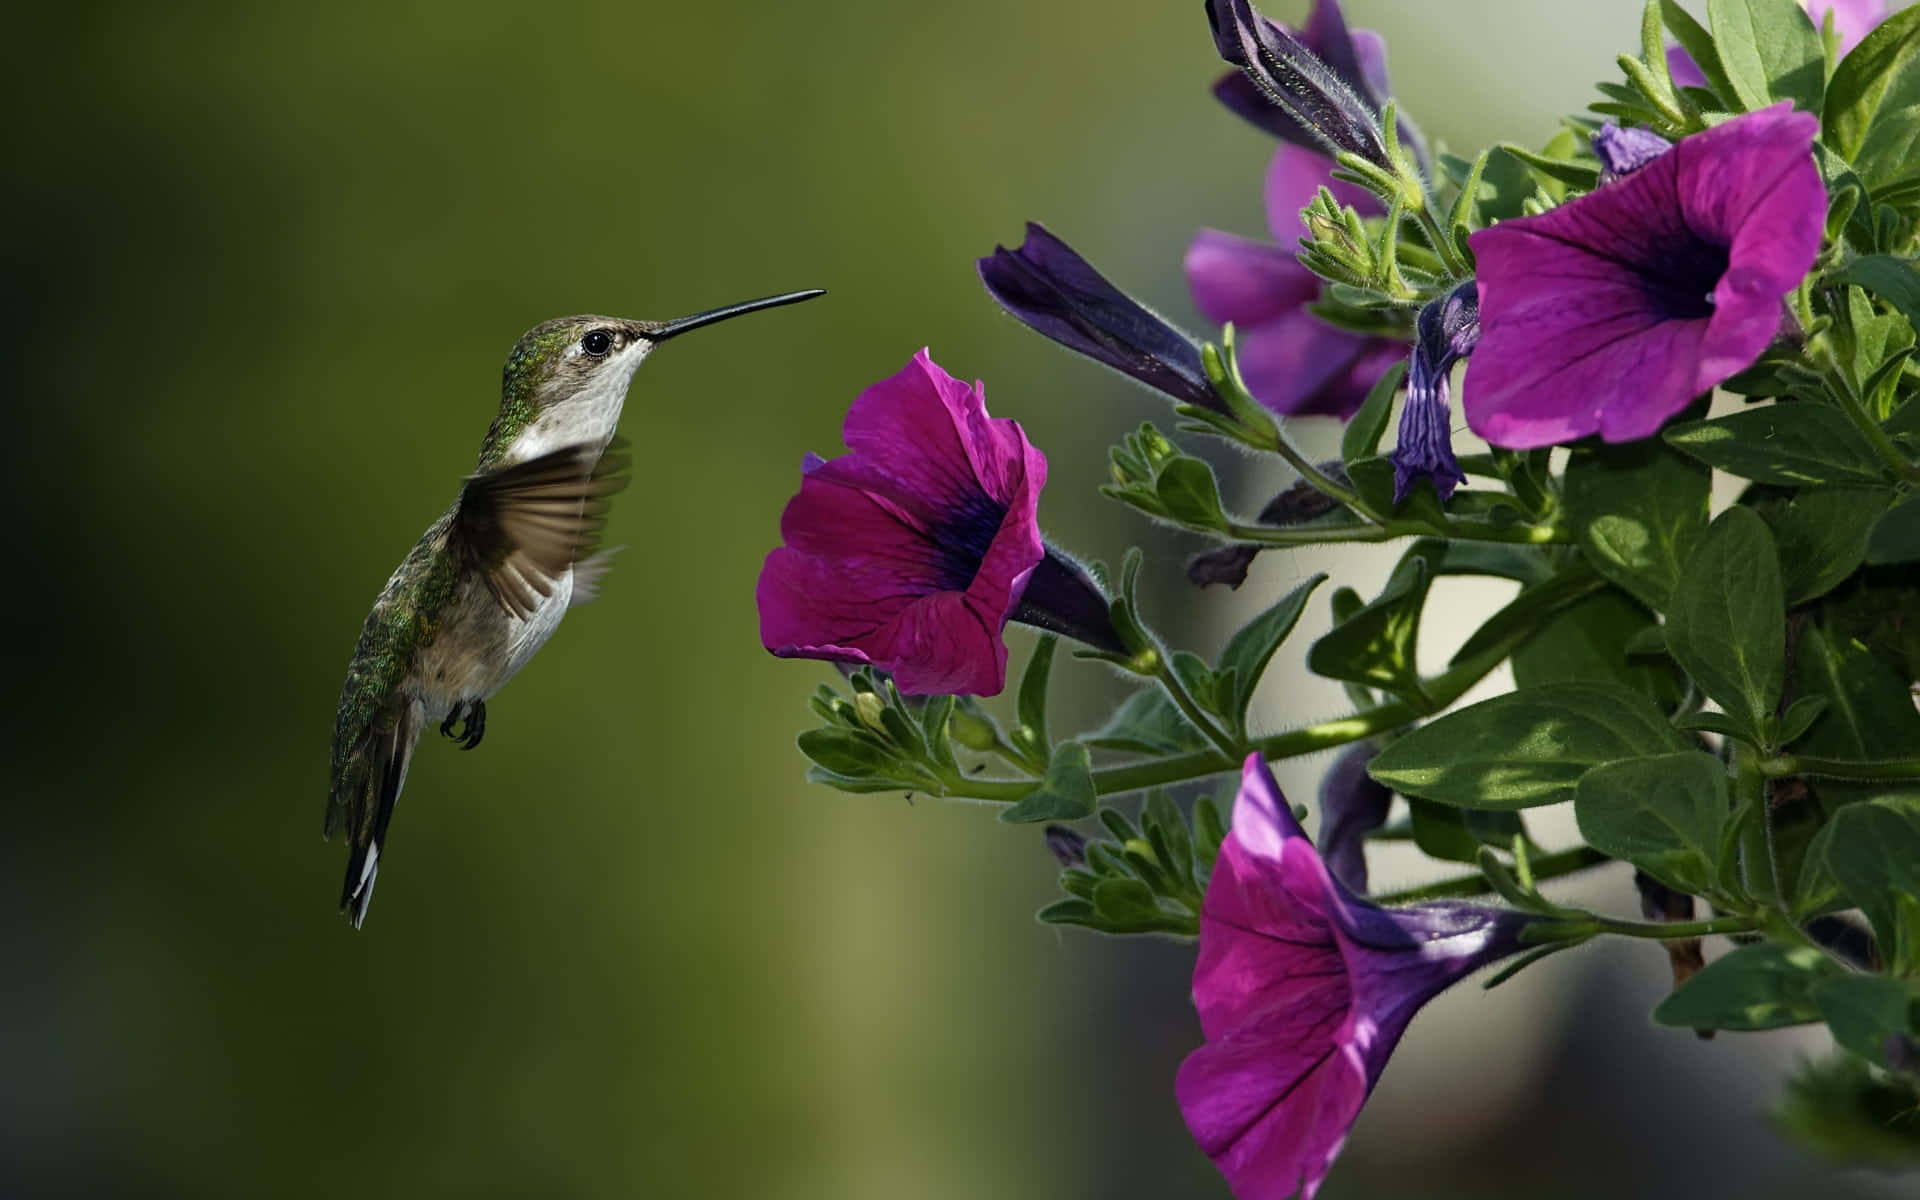 "A female hummingbird gracefully in flight."